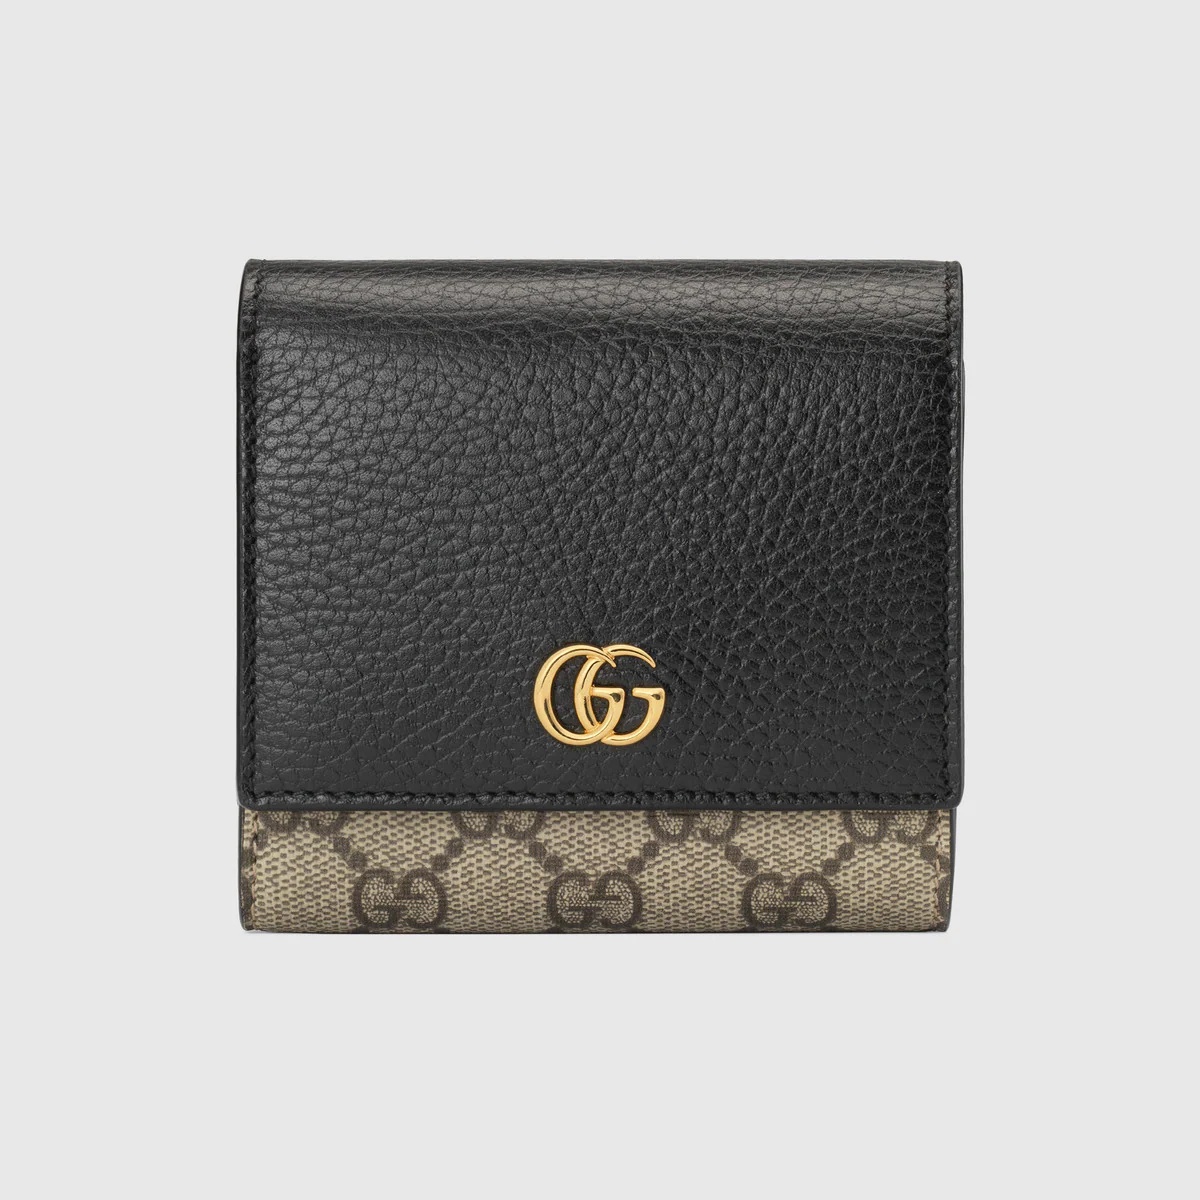 GG Marmont medium wallet - 1